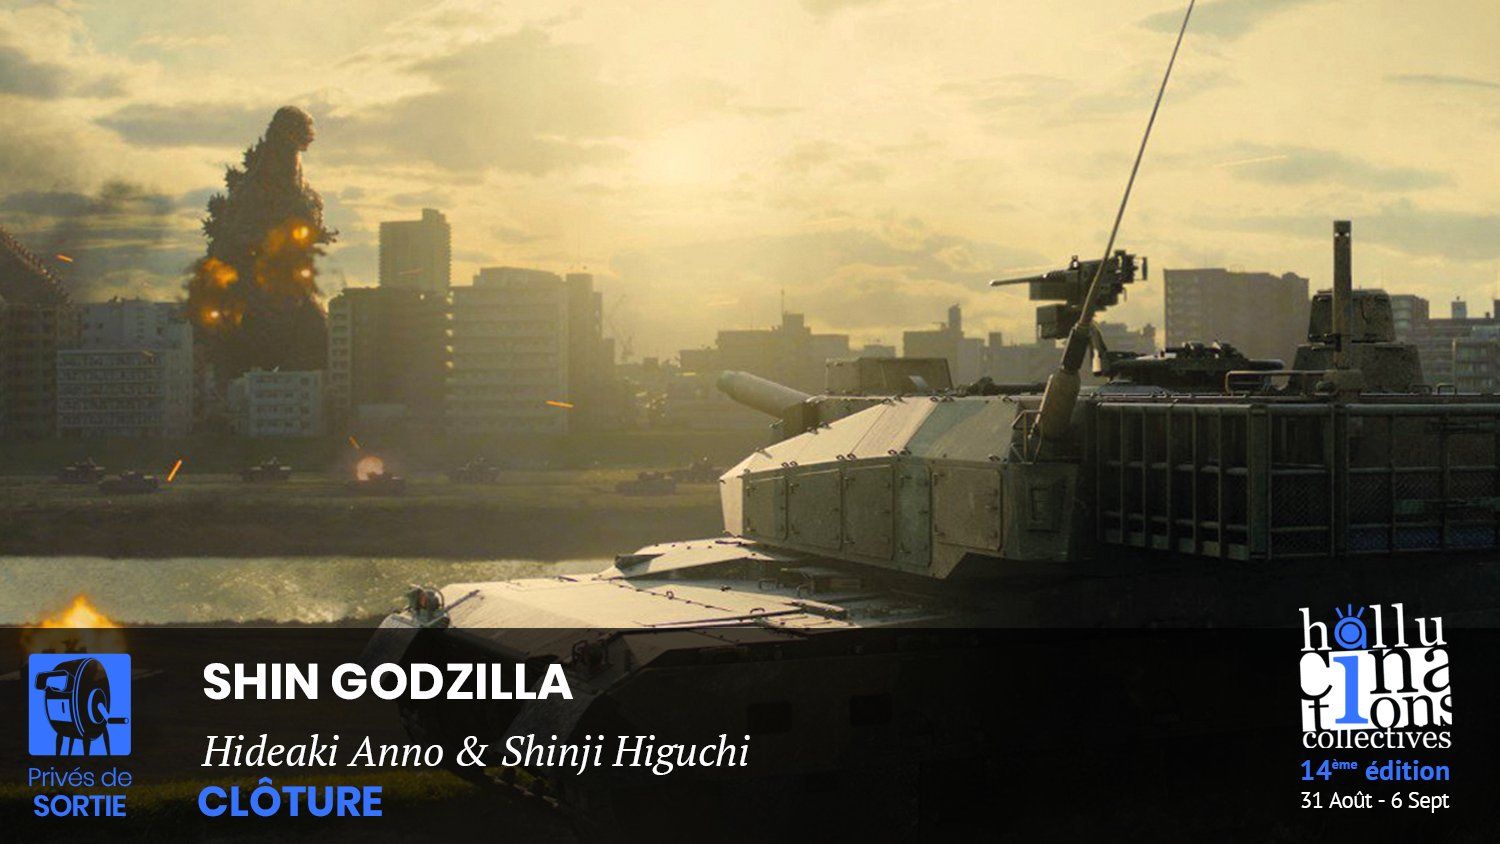 Hallucinations-collectives-Shin-Godzilla.jpg